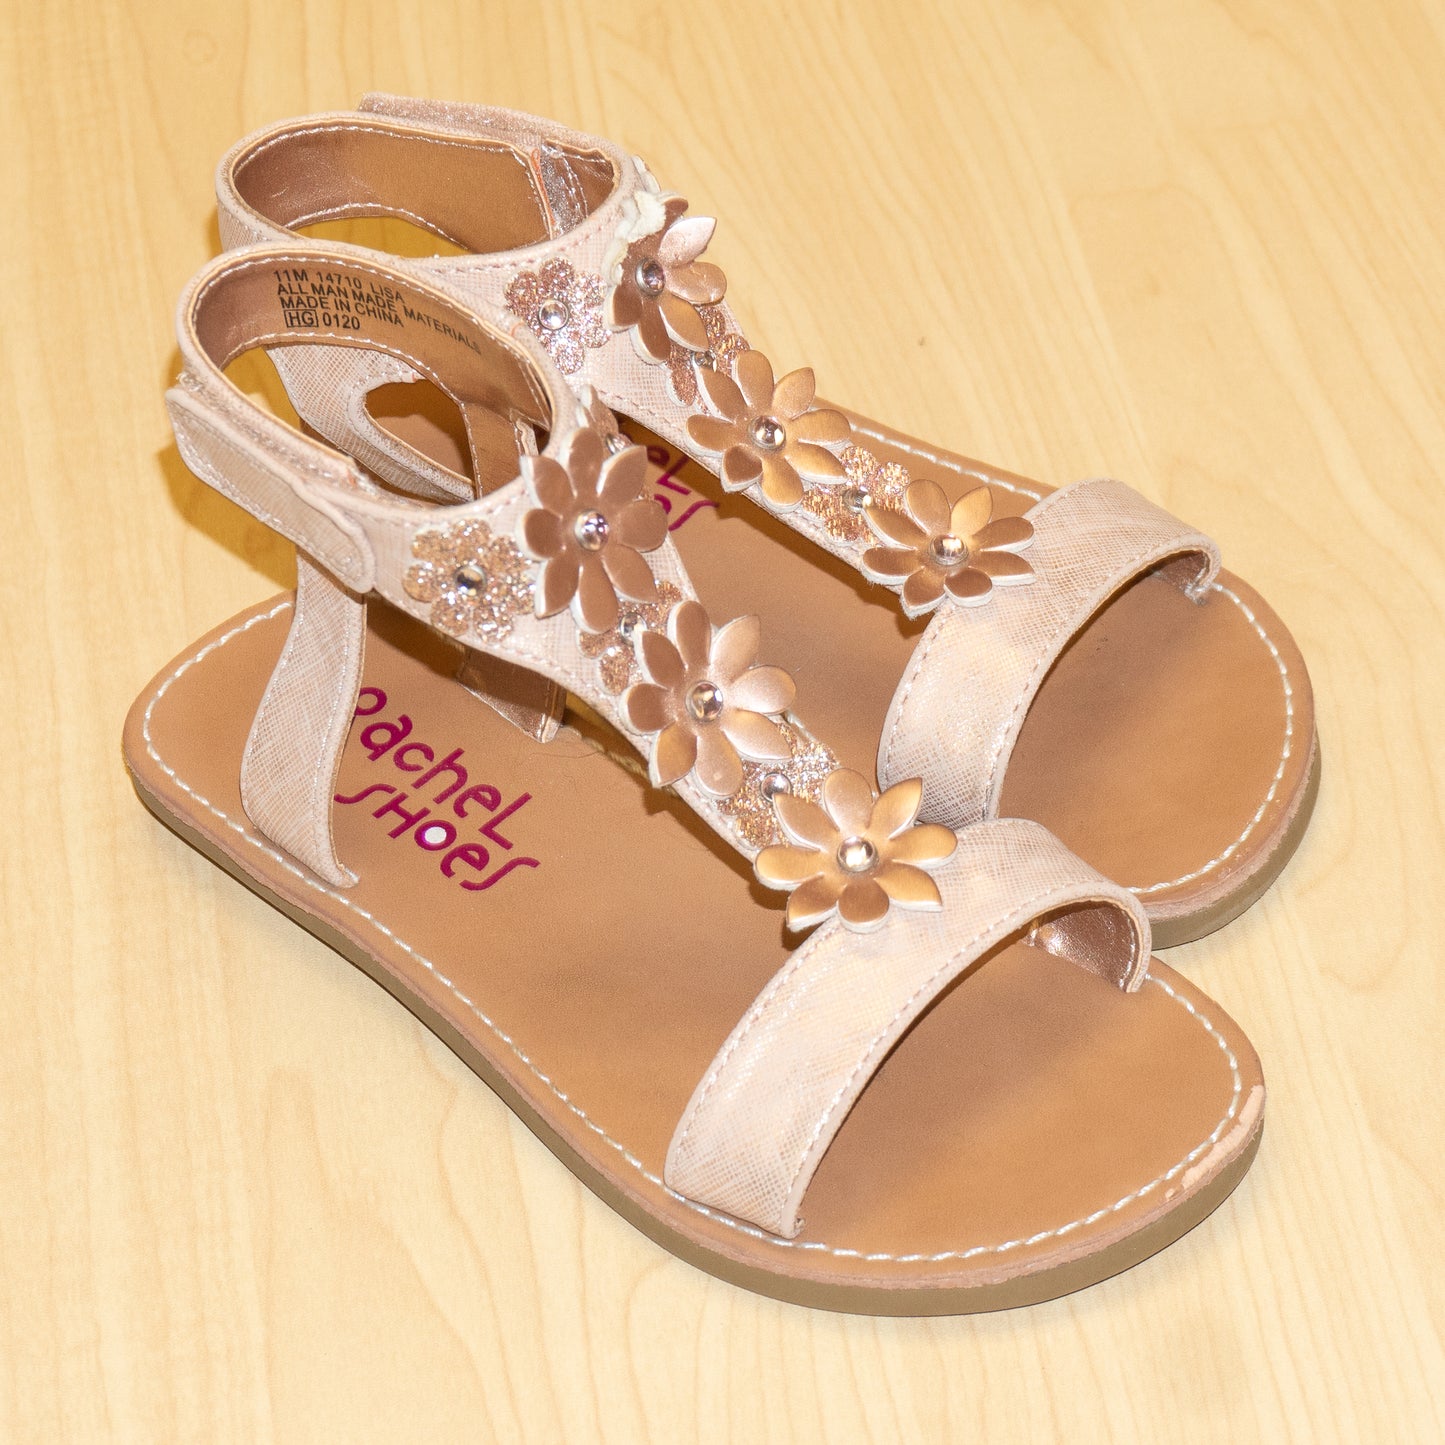 Flower Sandals Size 11